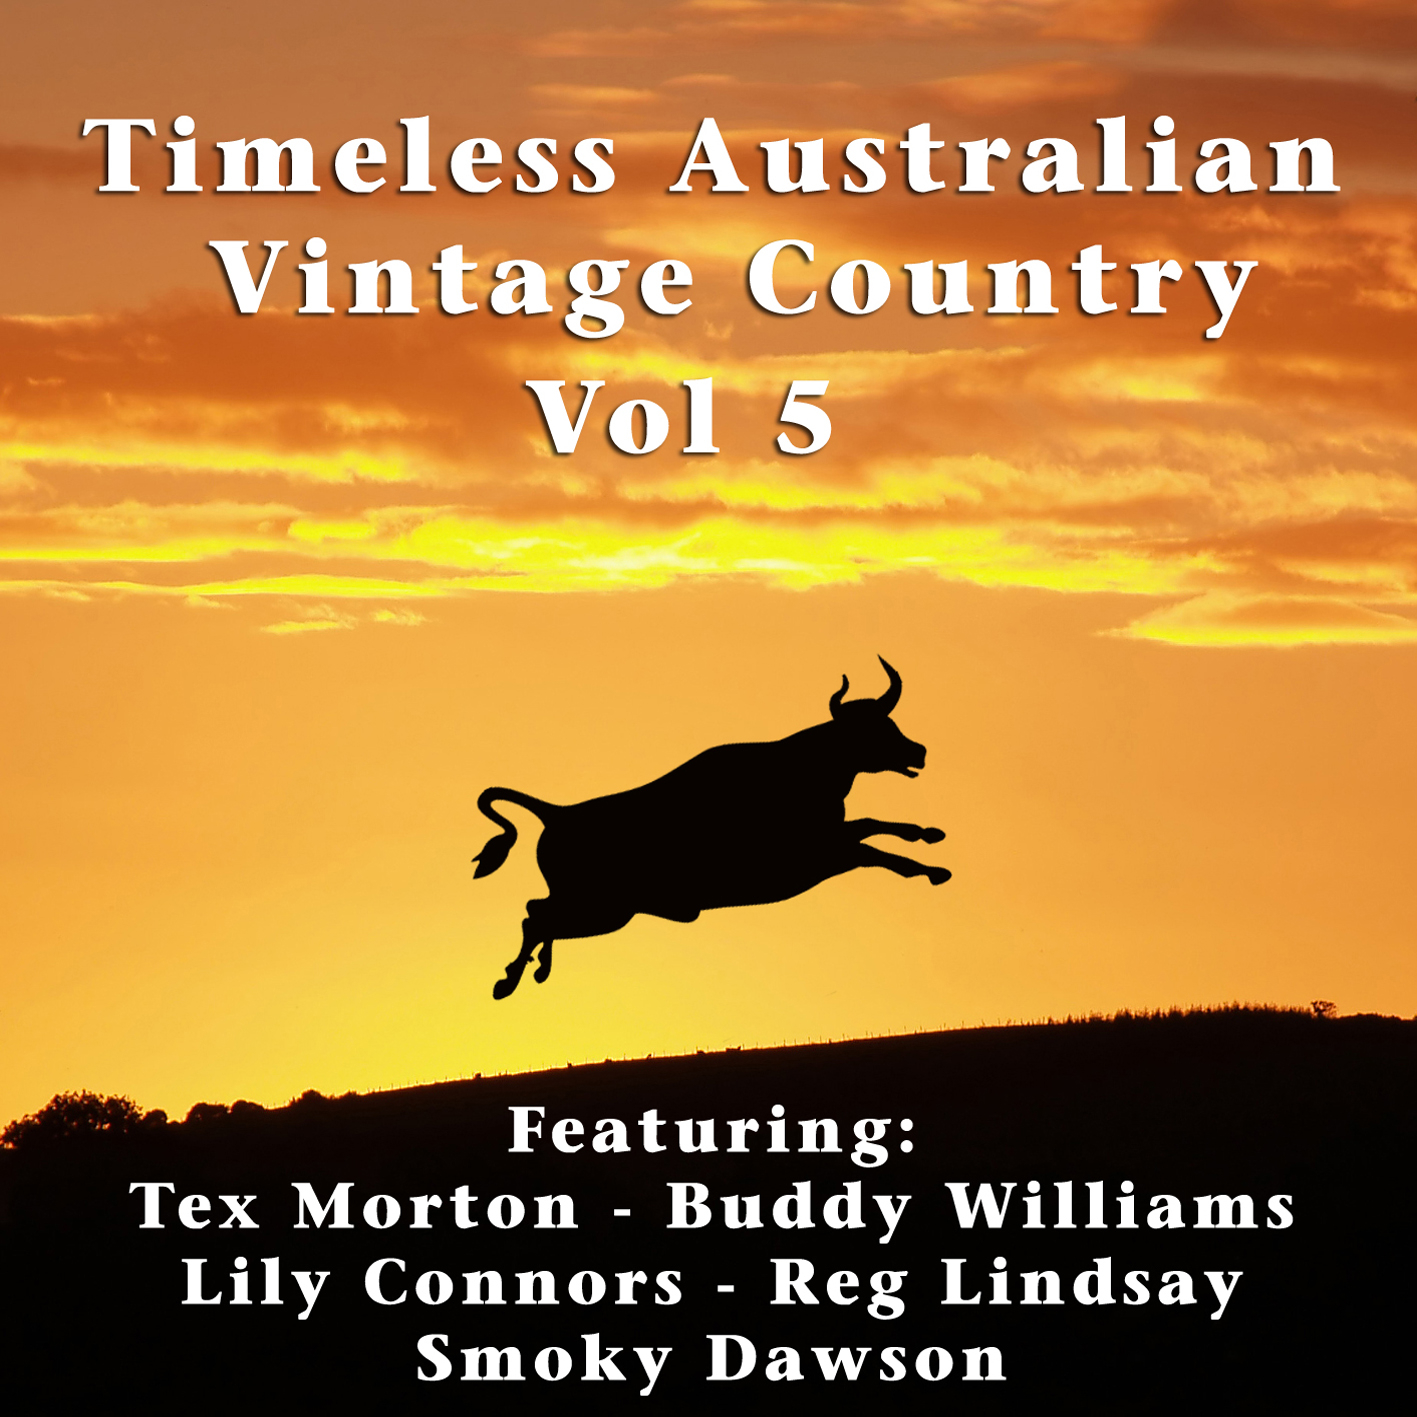 Timeless Australian Vintage Country Vol 5